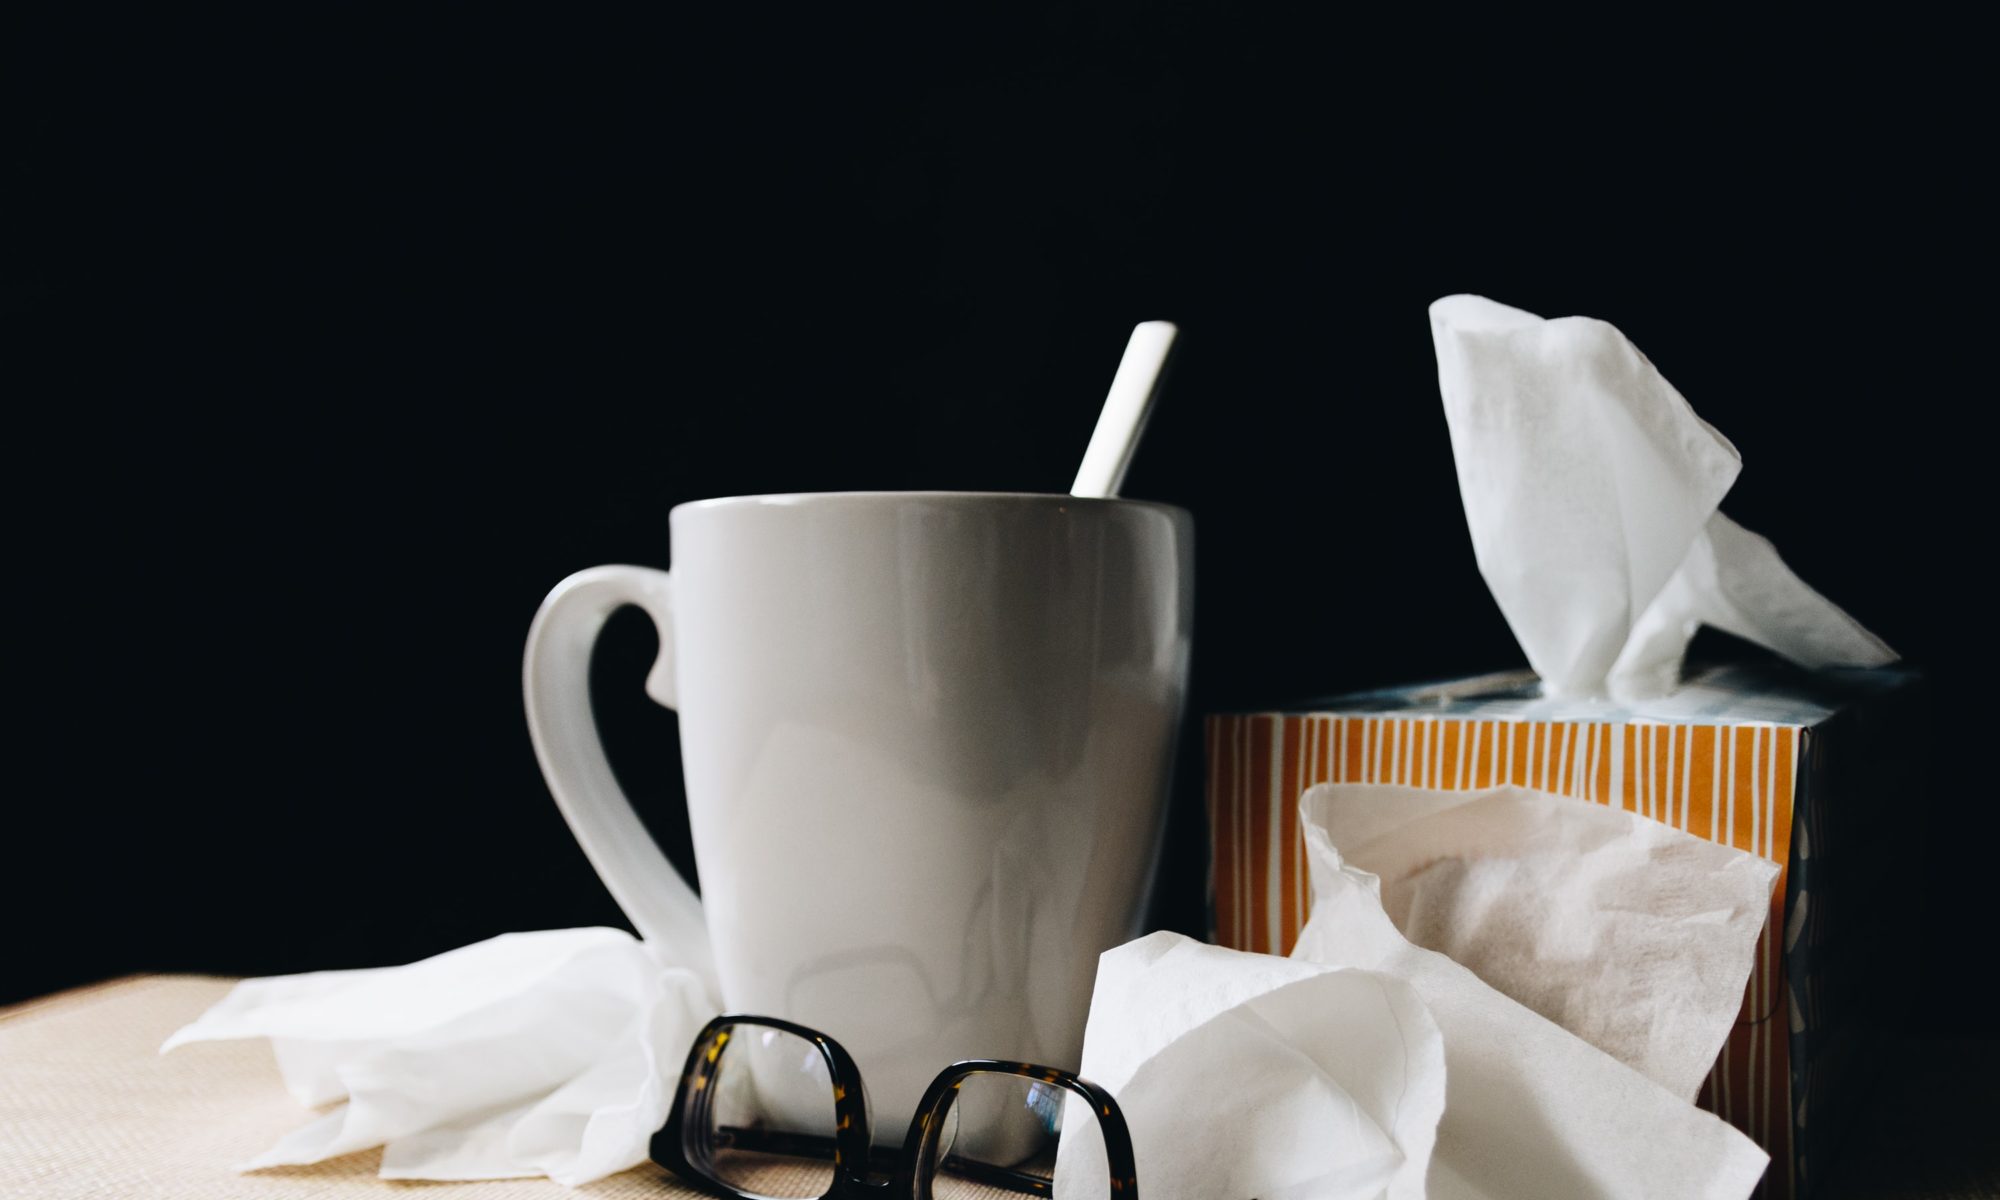 A tea mug, tissues, and glasses, on a table